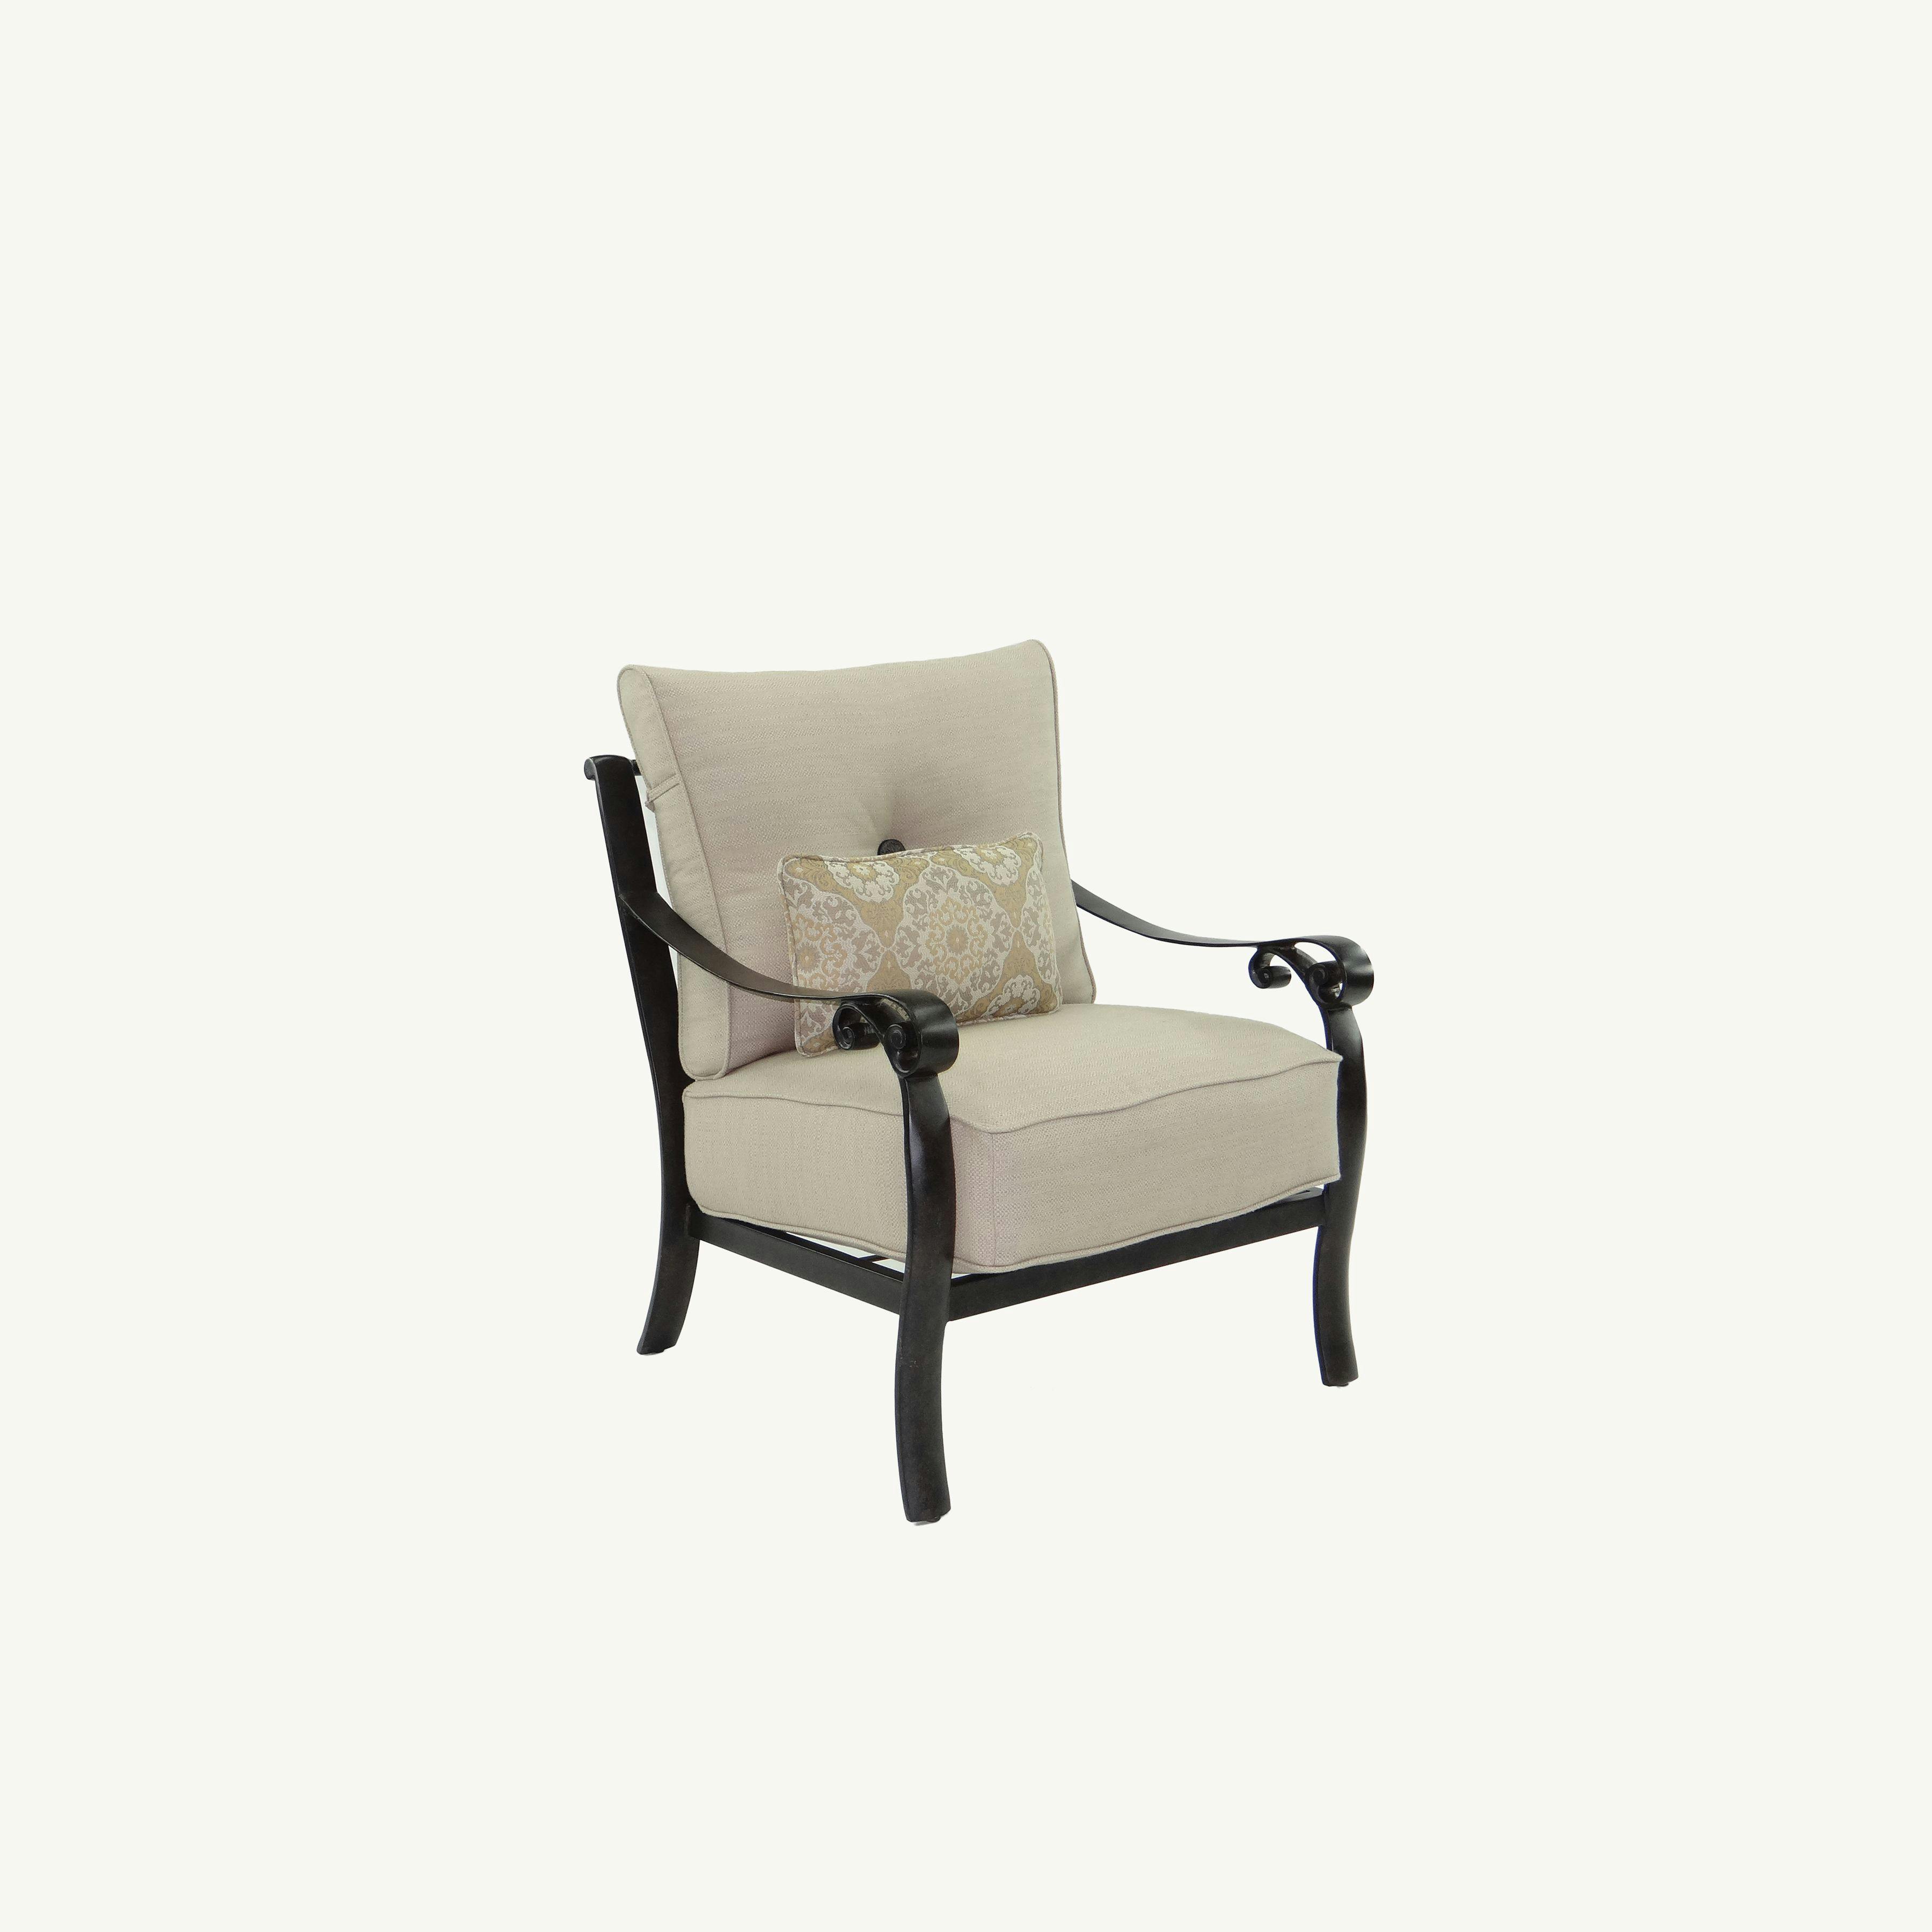 Bellanova Cushioned Lounge Chair